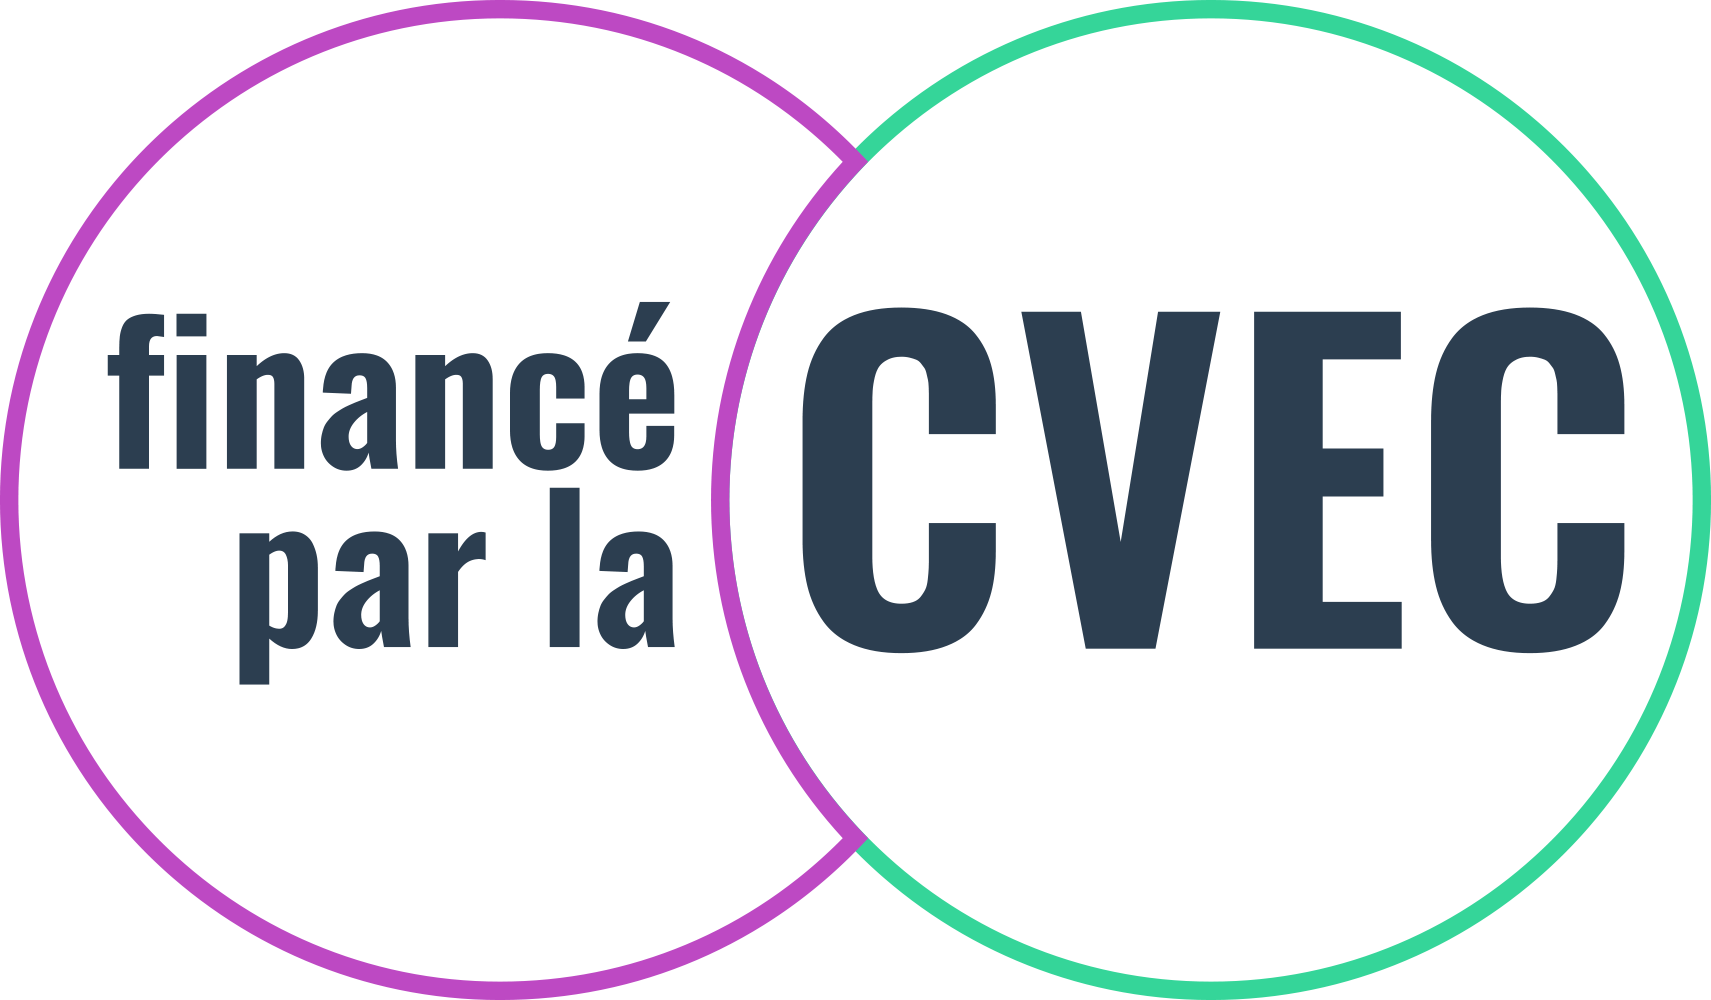 02_CVEC_finance_par_blanc_RVB.png